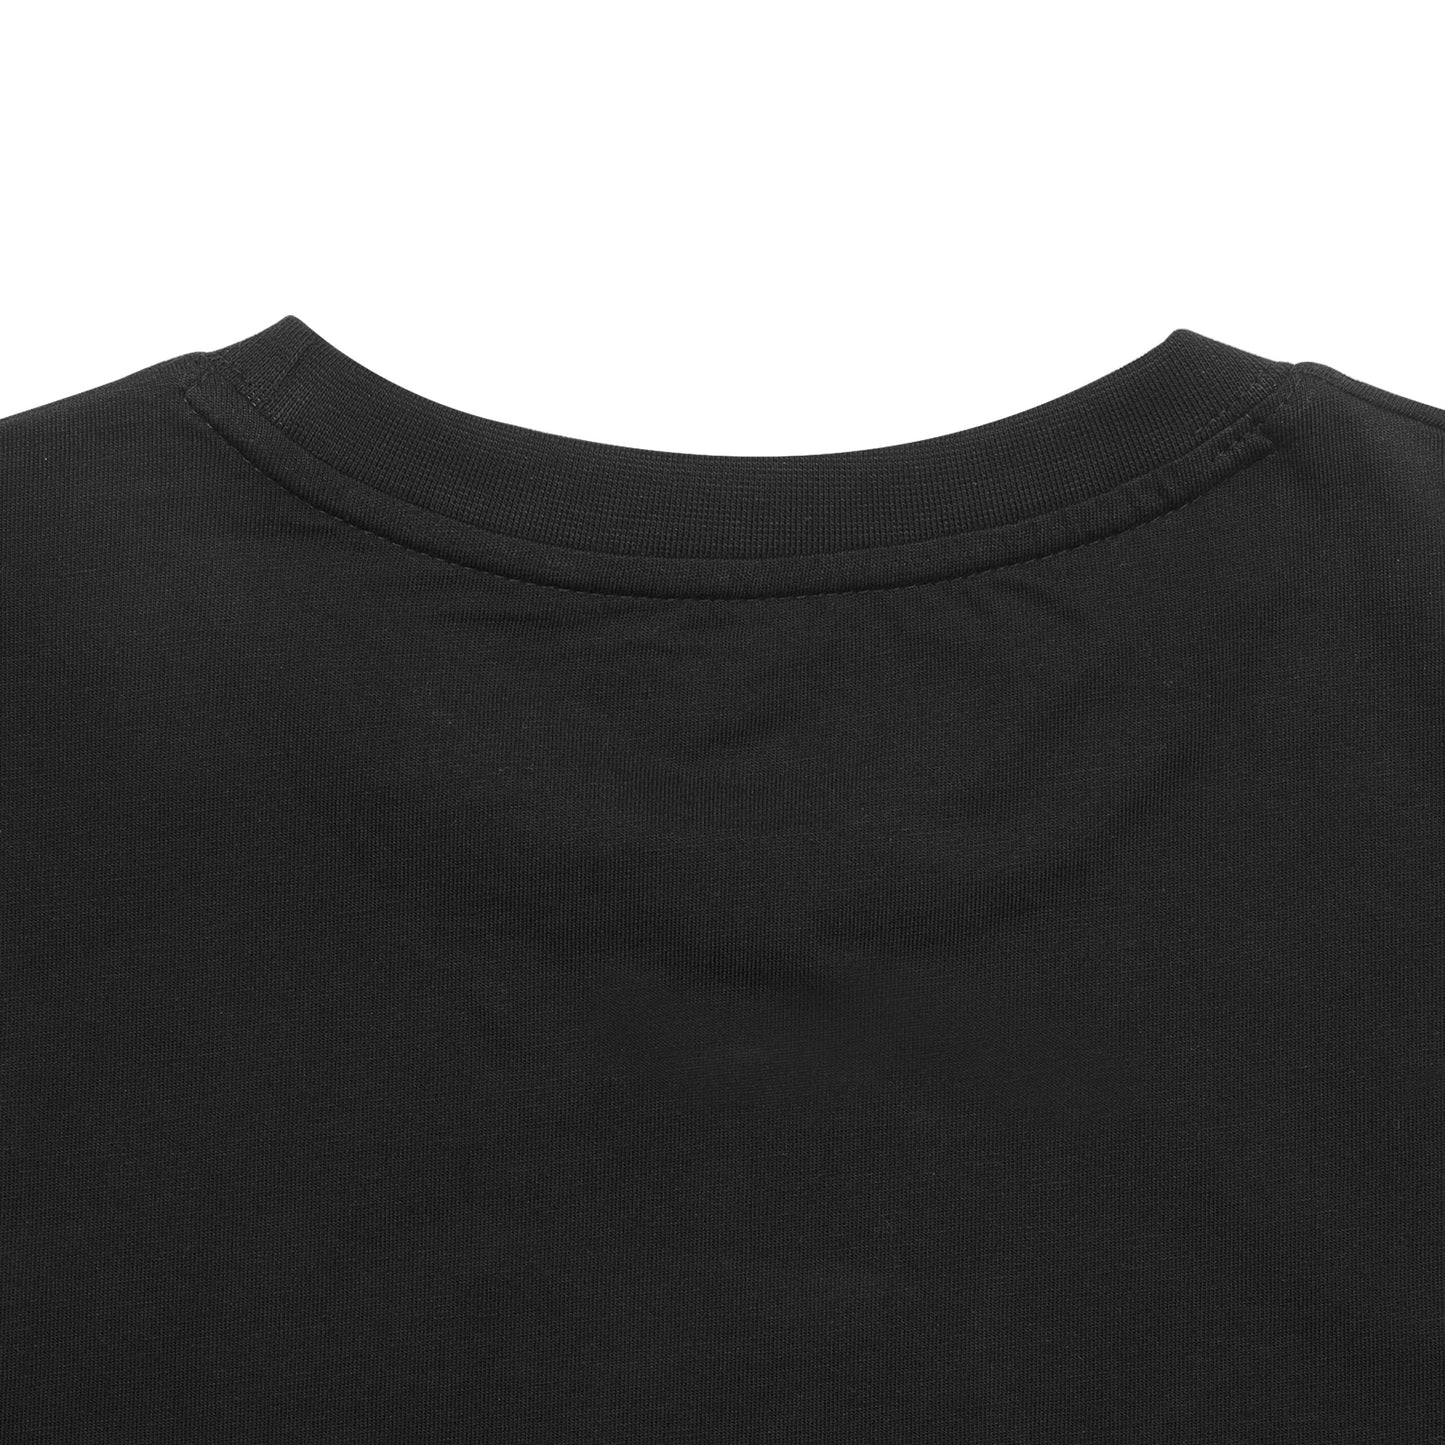 Clts21 Bjj Adidas Jiu Jitsu T Shirt Black 06